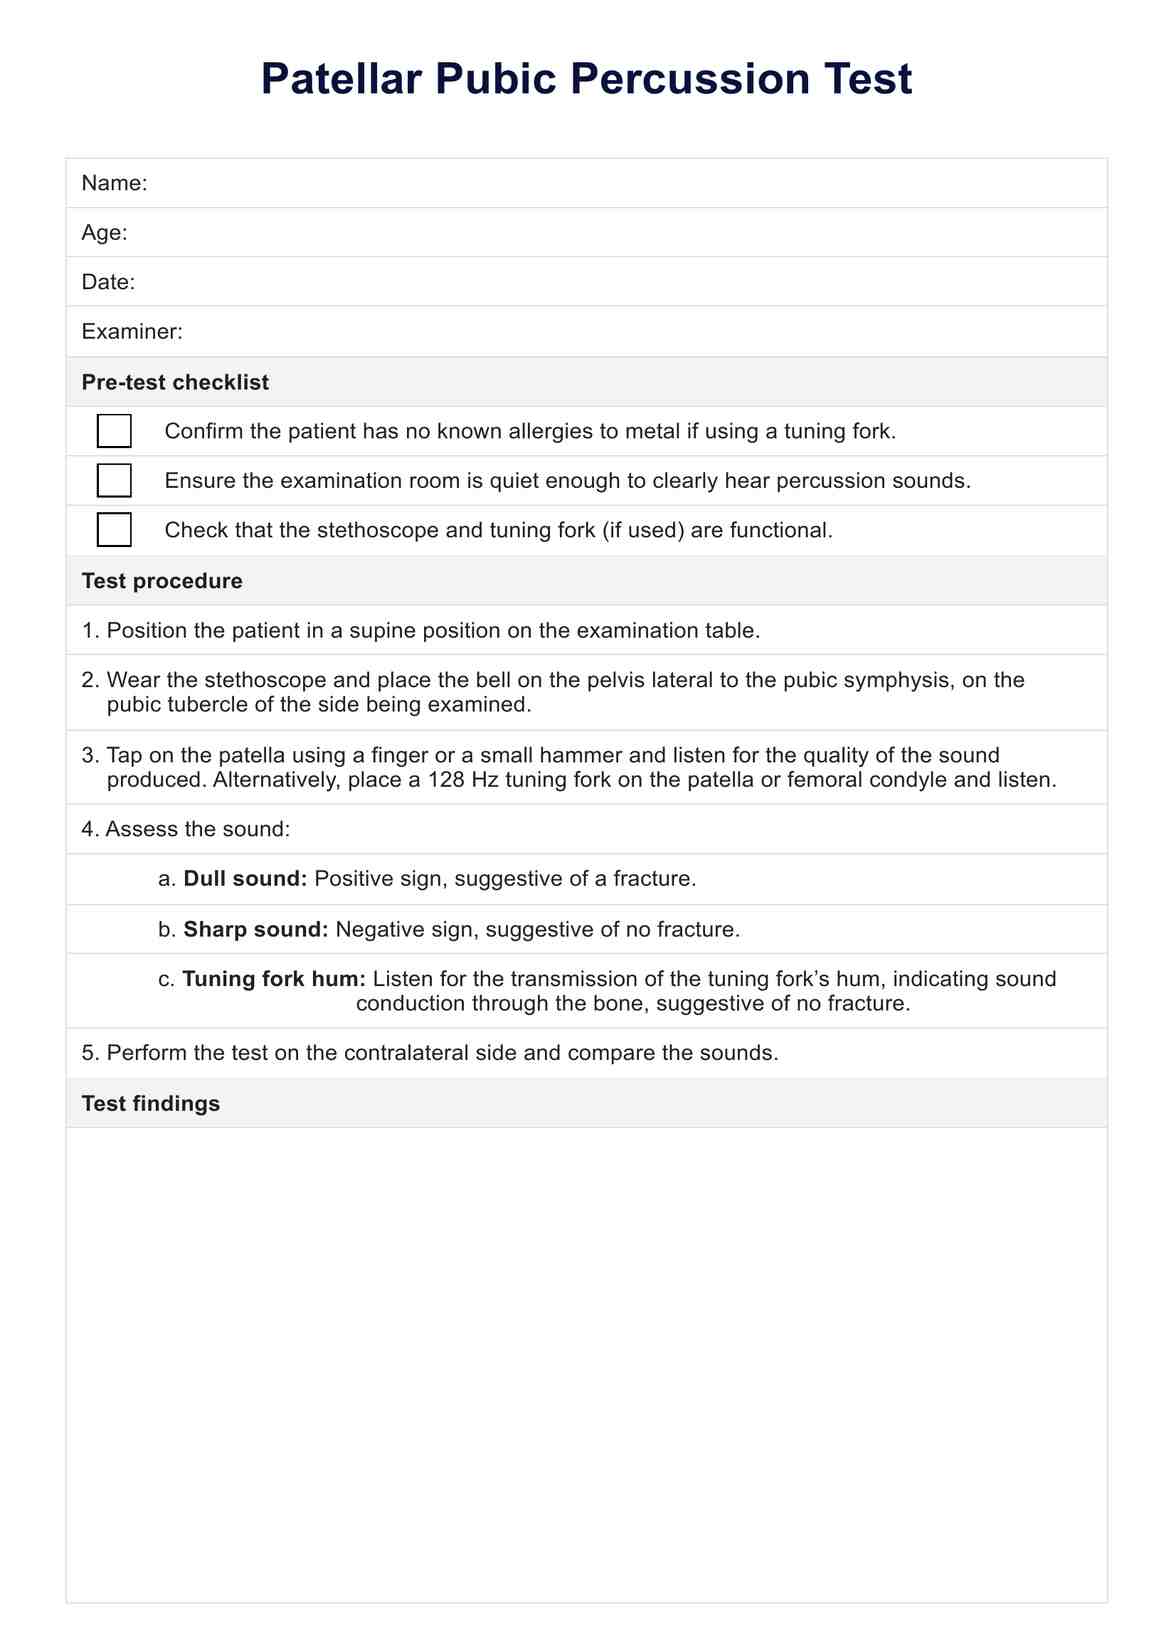 Patellar Pubic Percussion Test PDF Example